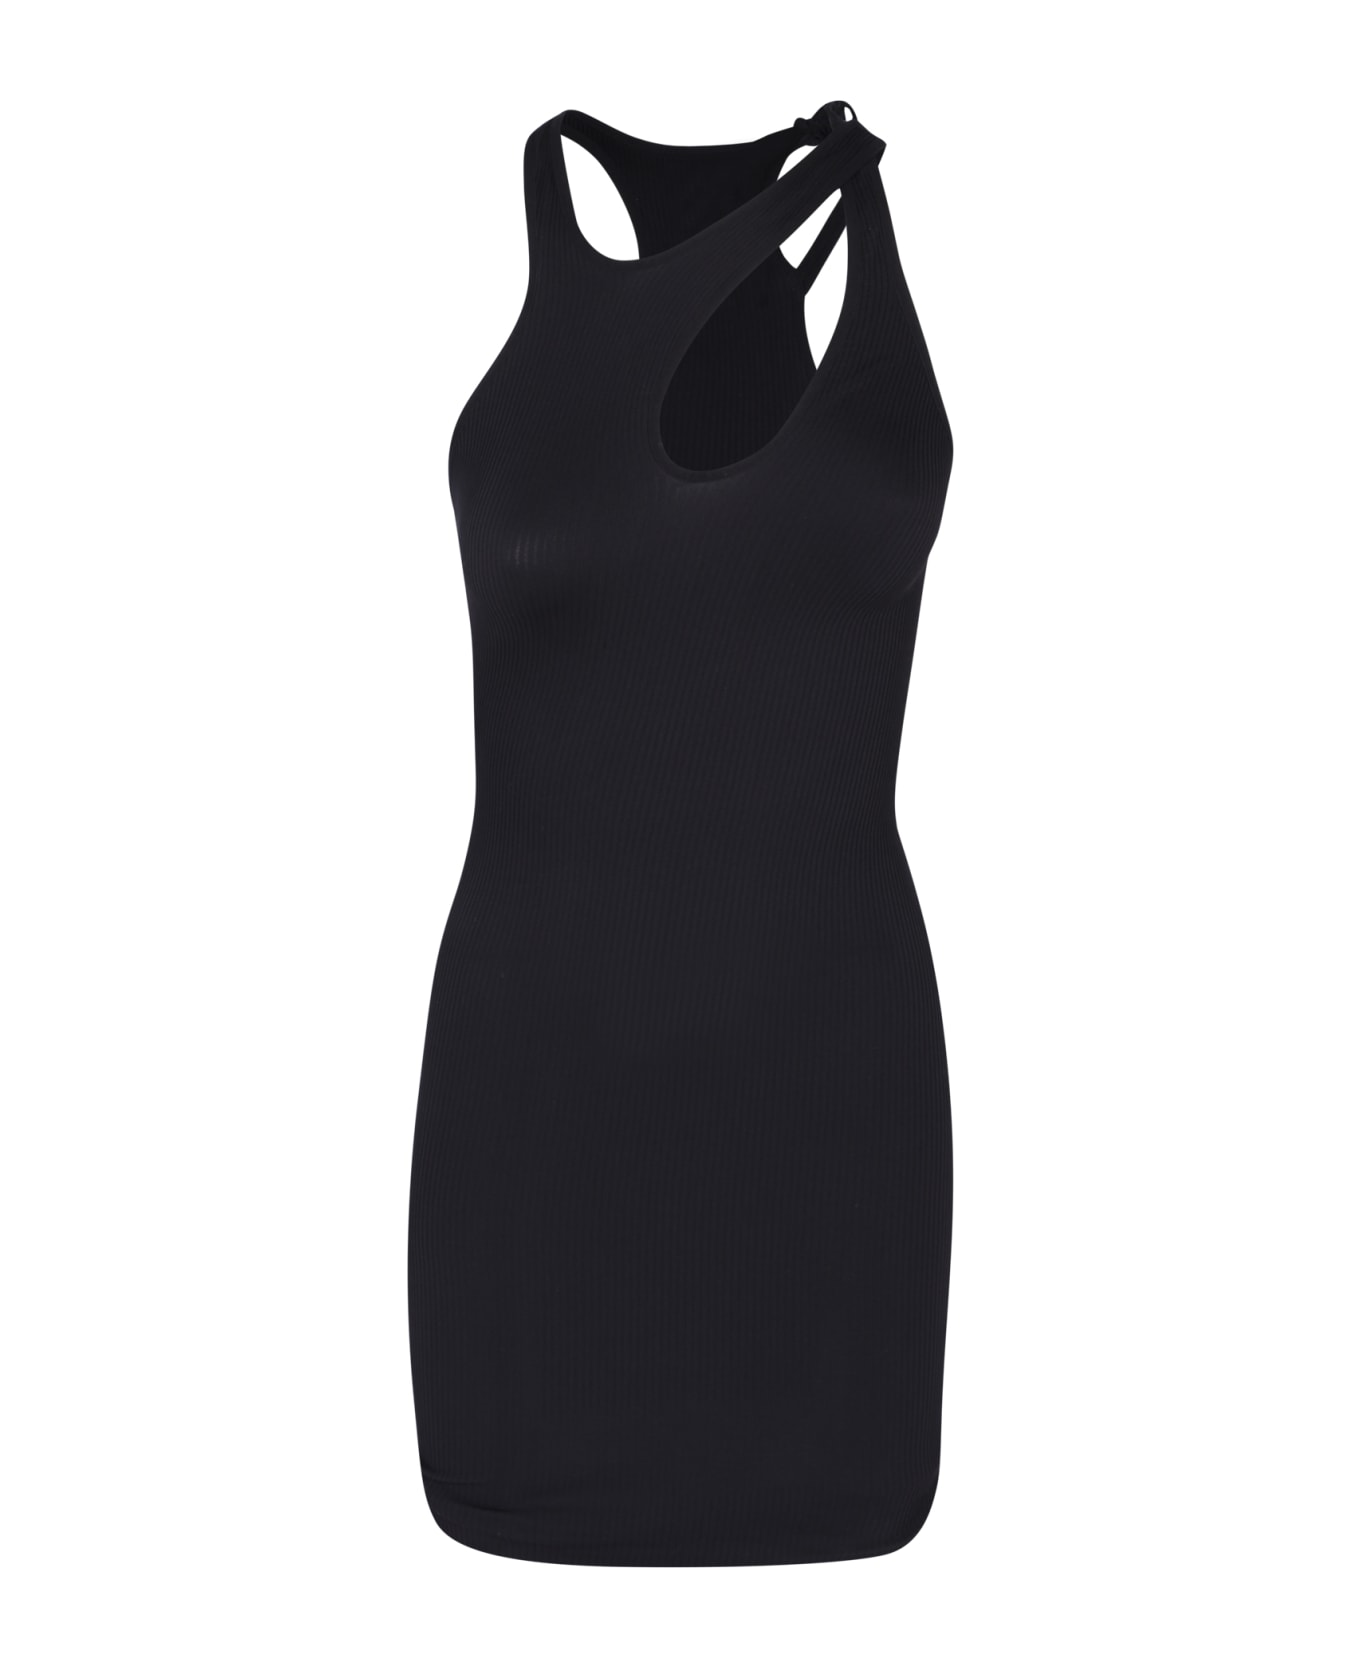 ANDREĀDAMO Cut-out Details Black Dress - Black ワンピース＆ドレス